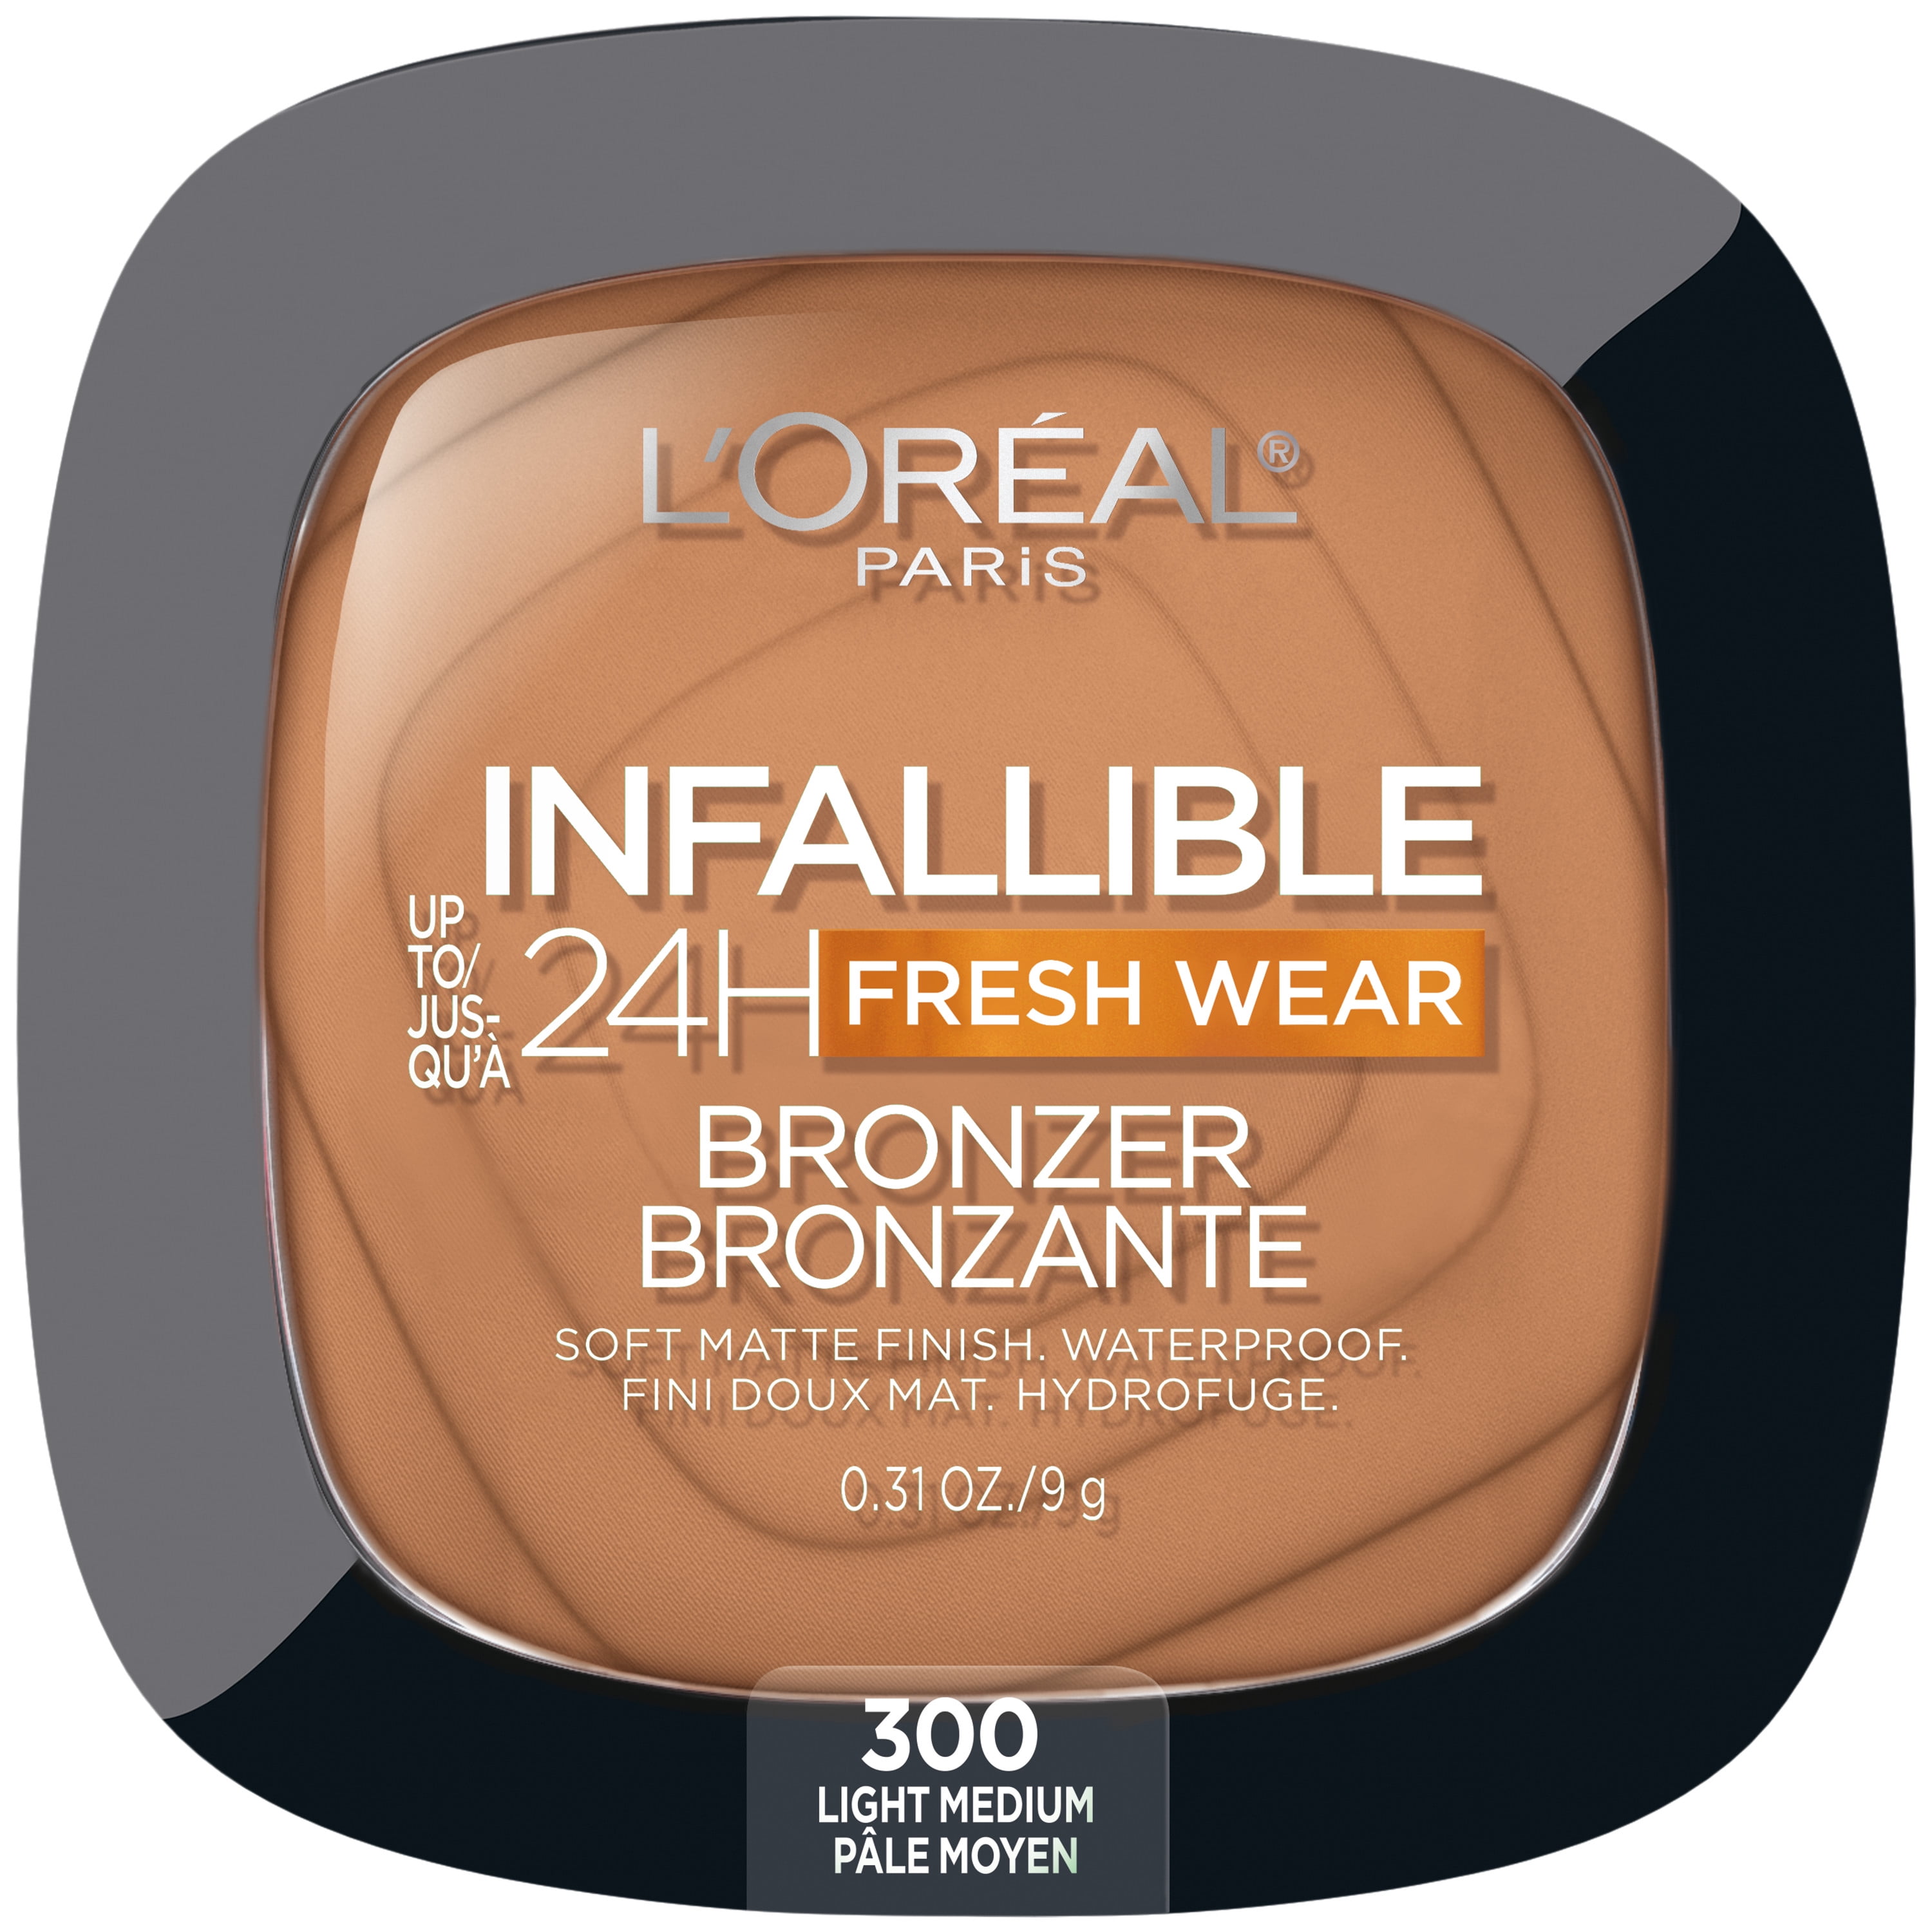 L'Oreal Paris Infallible Up to 24H Fresh Wear Soft Matte Bronzer - Deep Tan, 0.31 oz